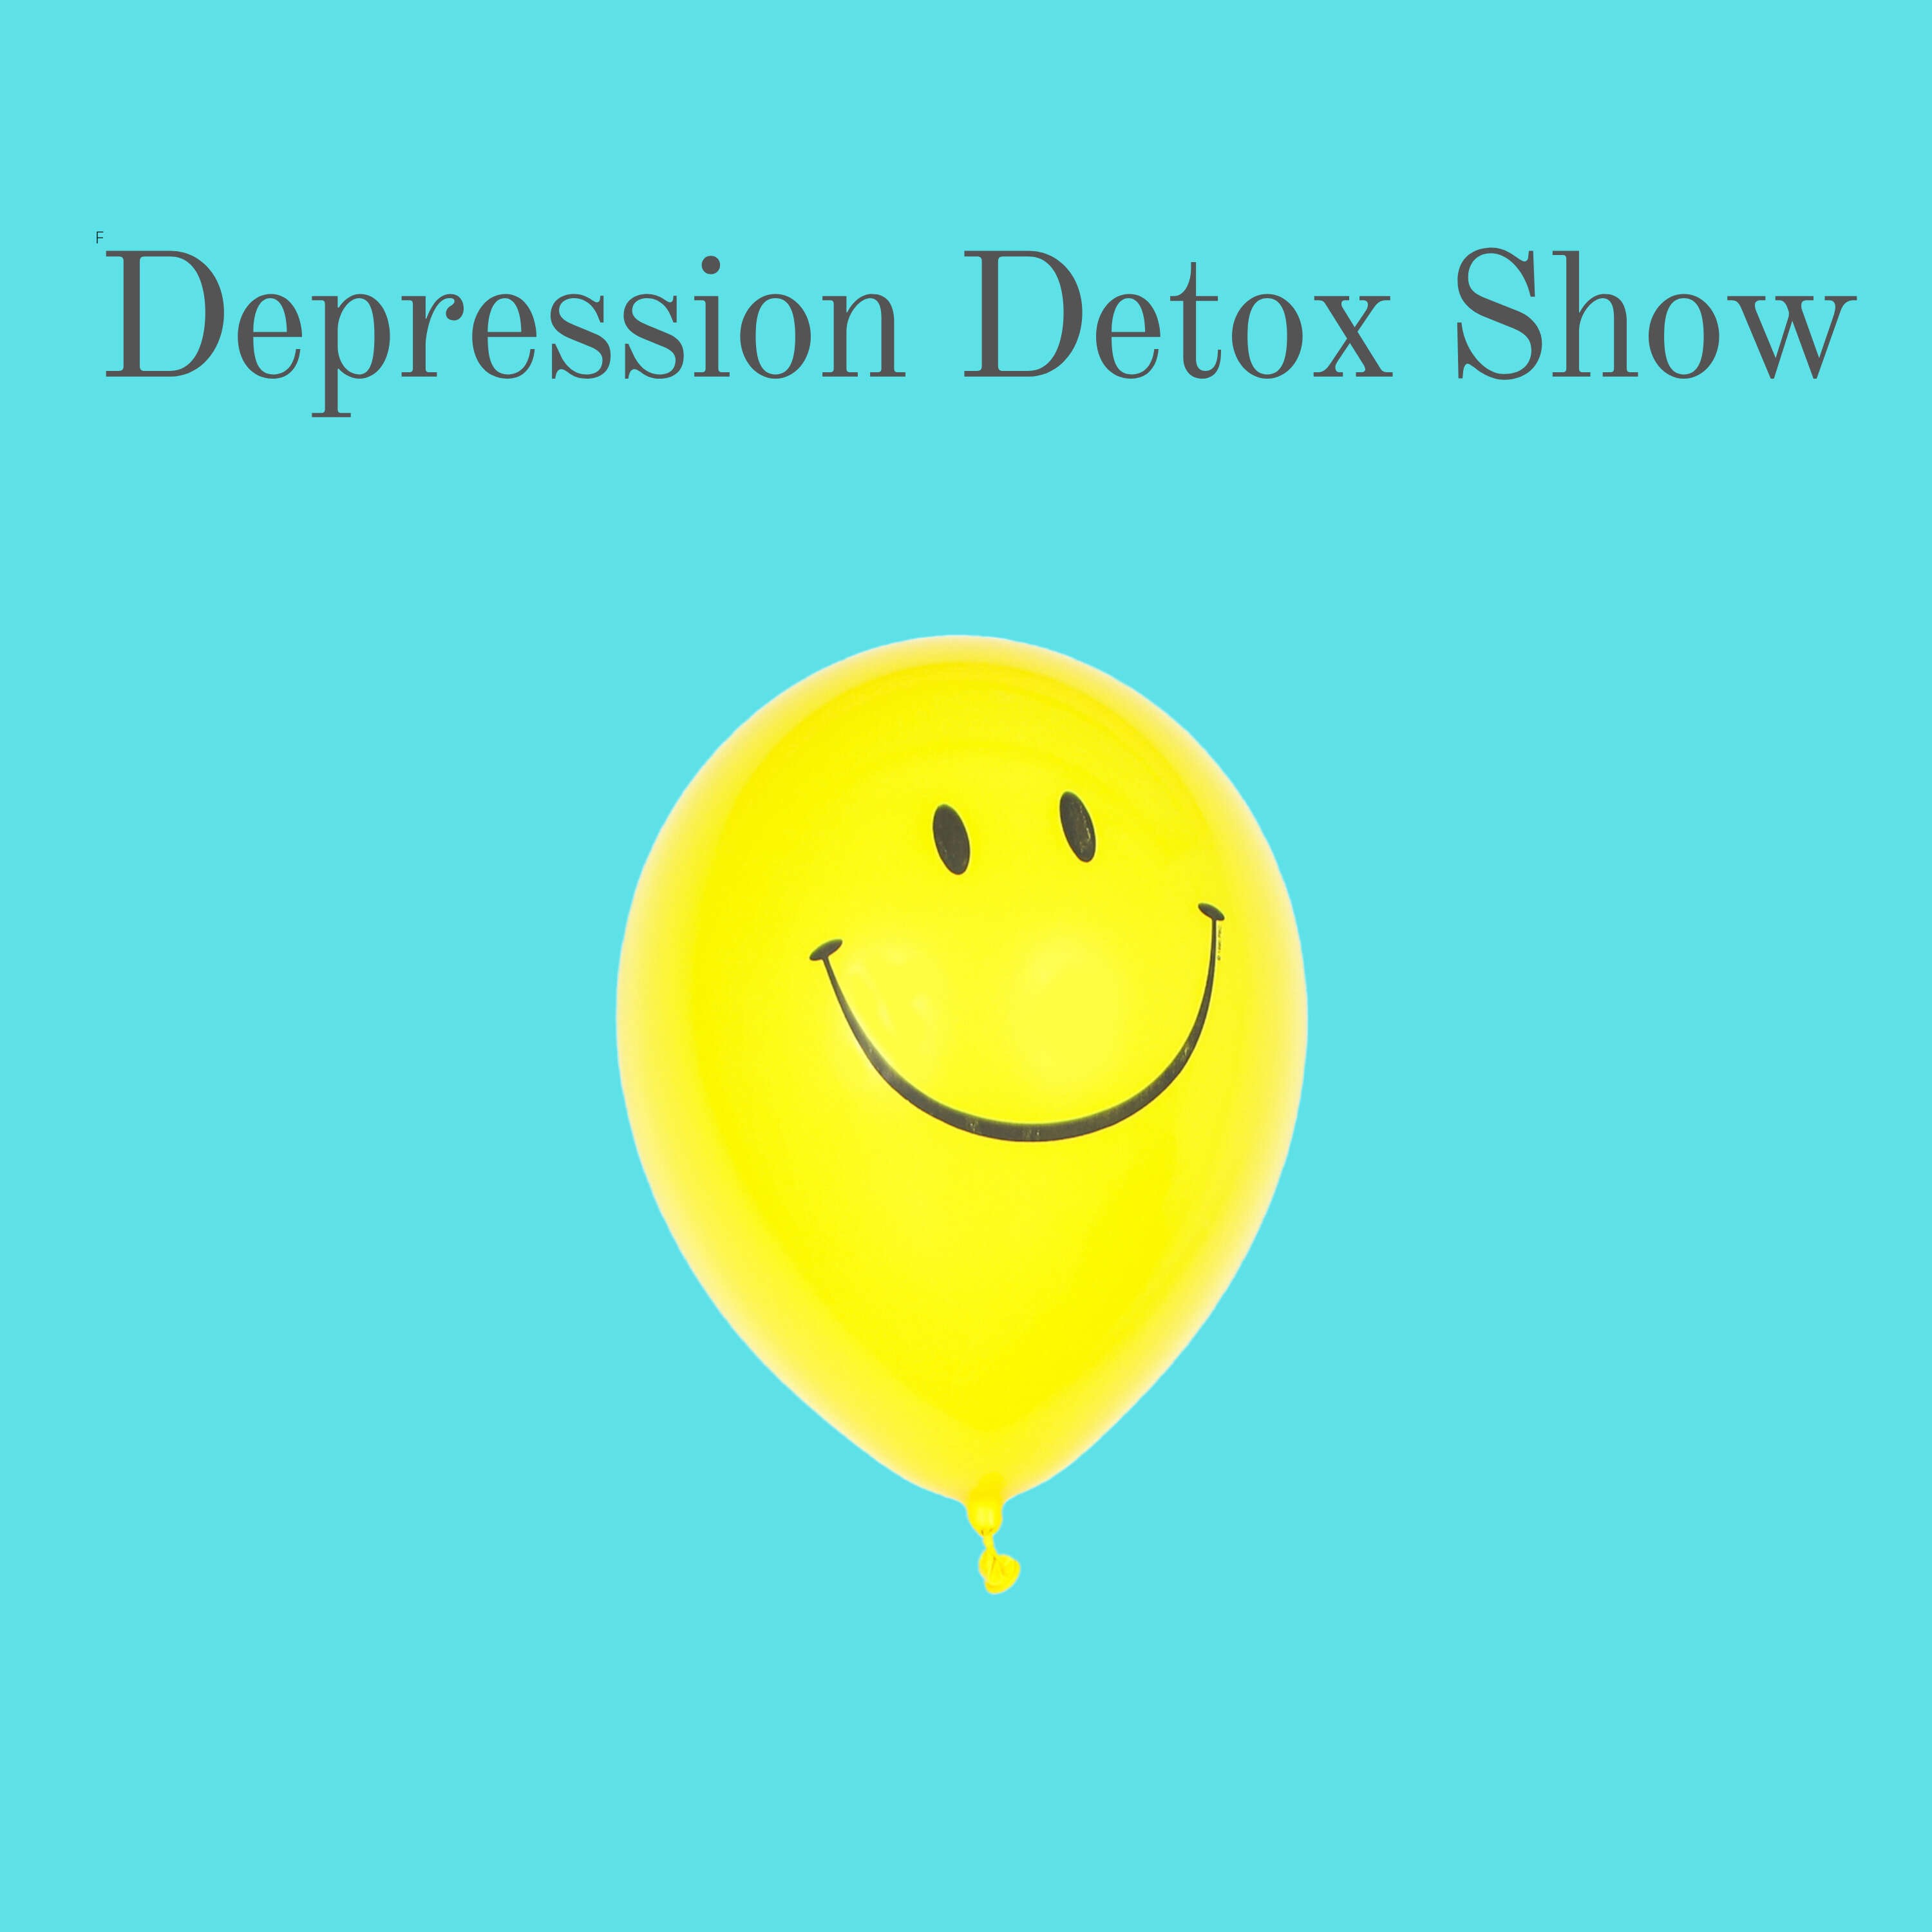 Depression Detox Show | Daily Inspirational Talks